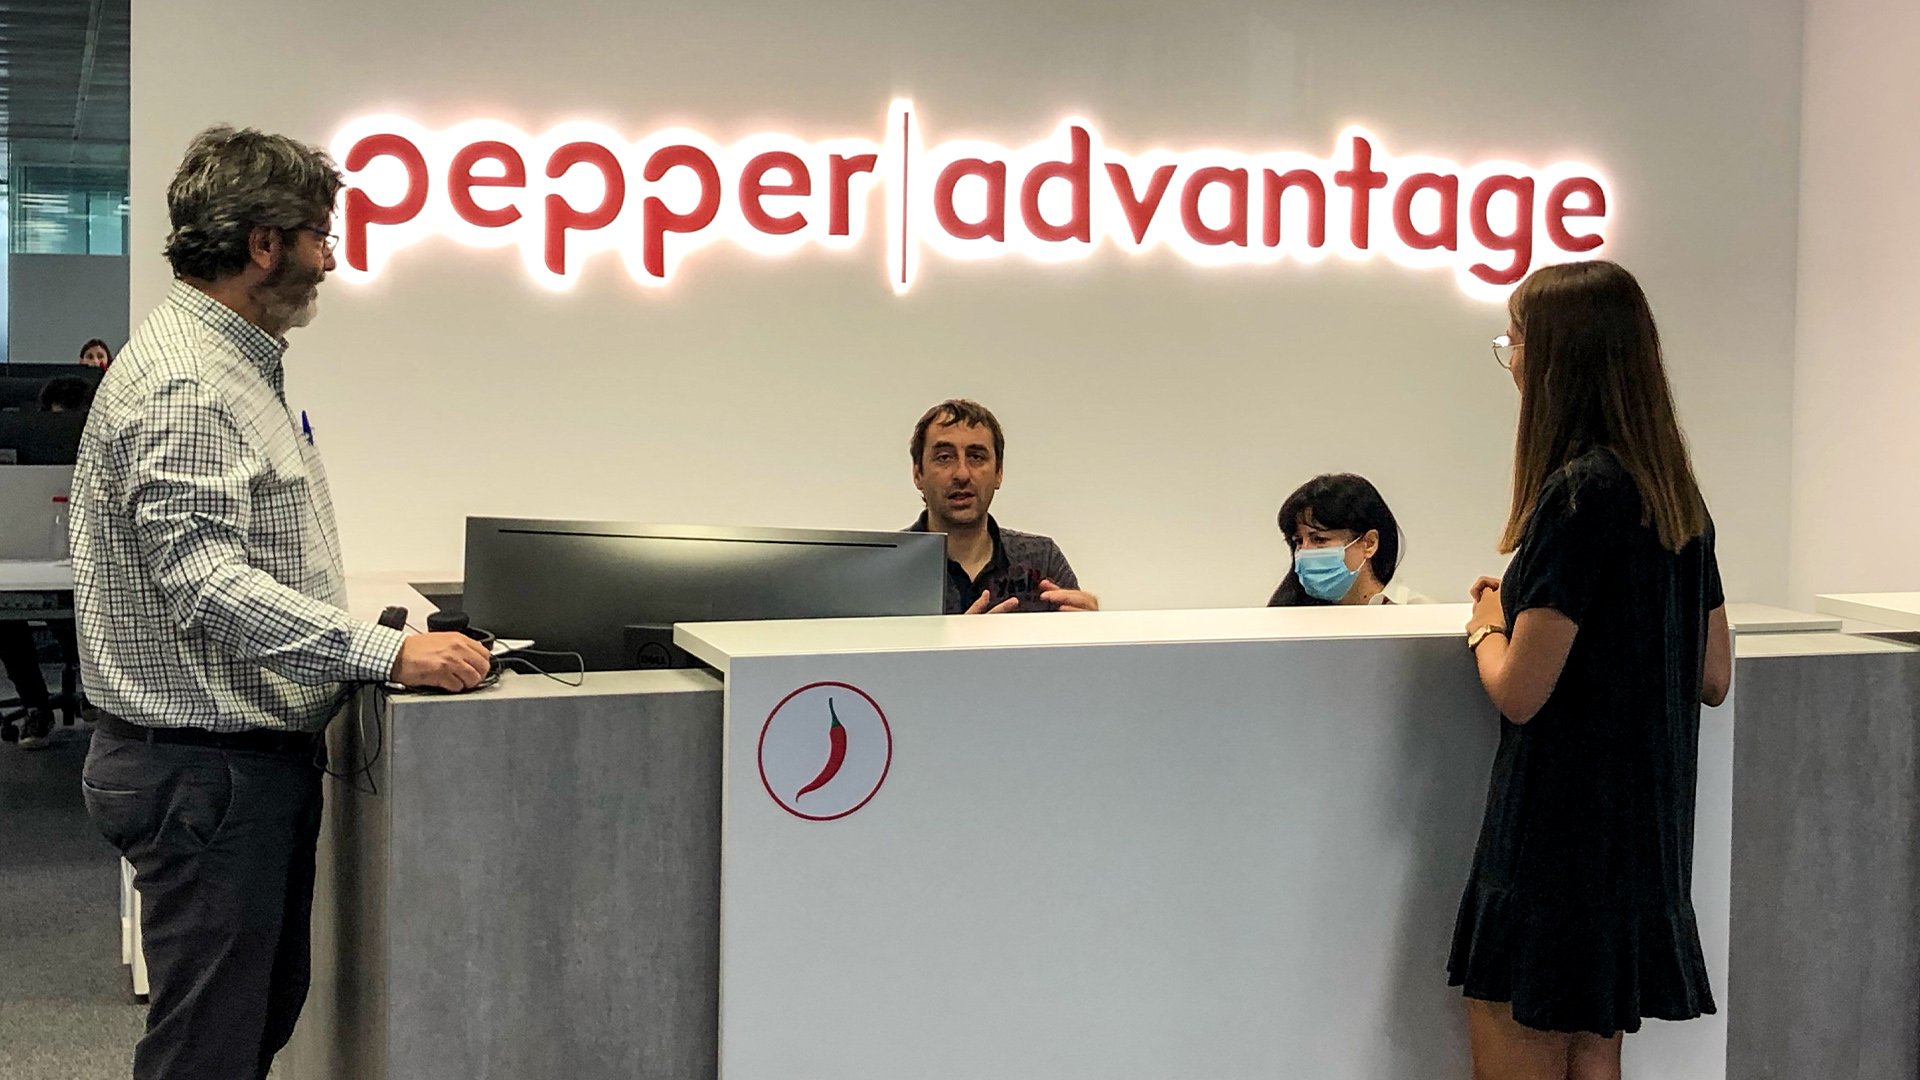 Pepper Advantage Spain office